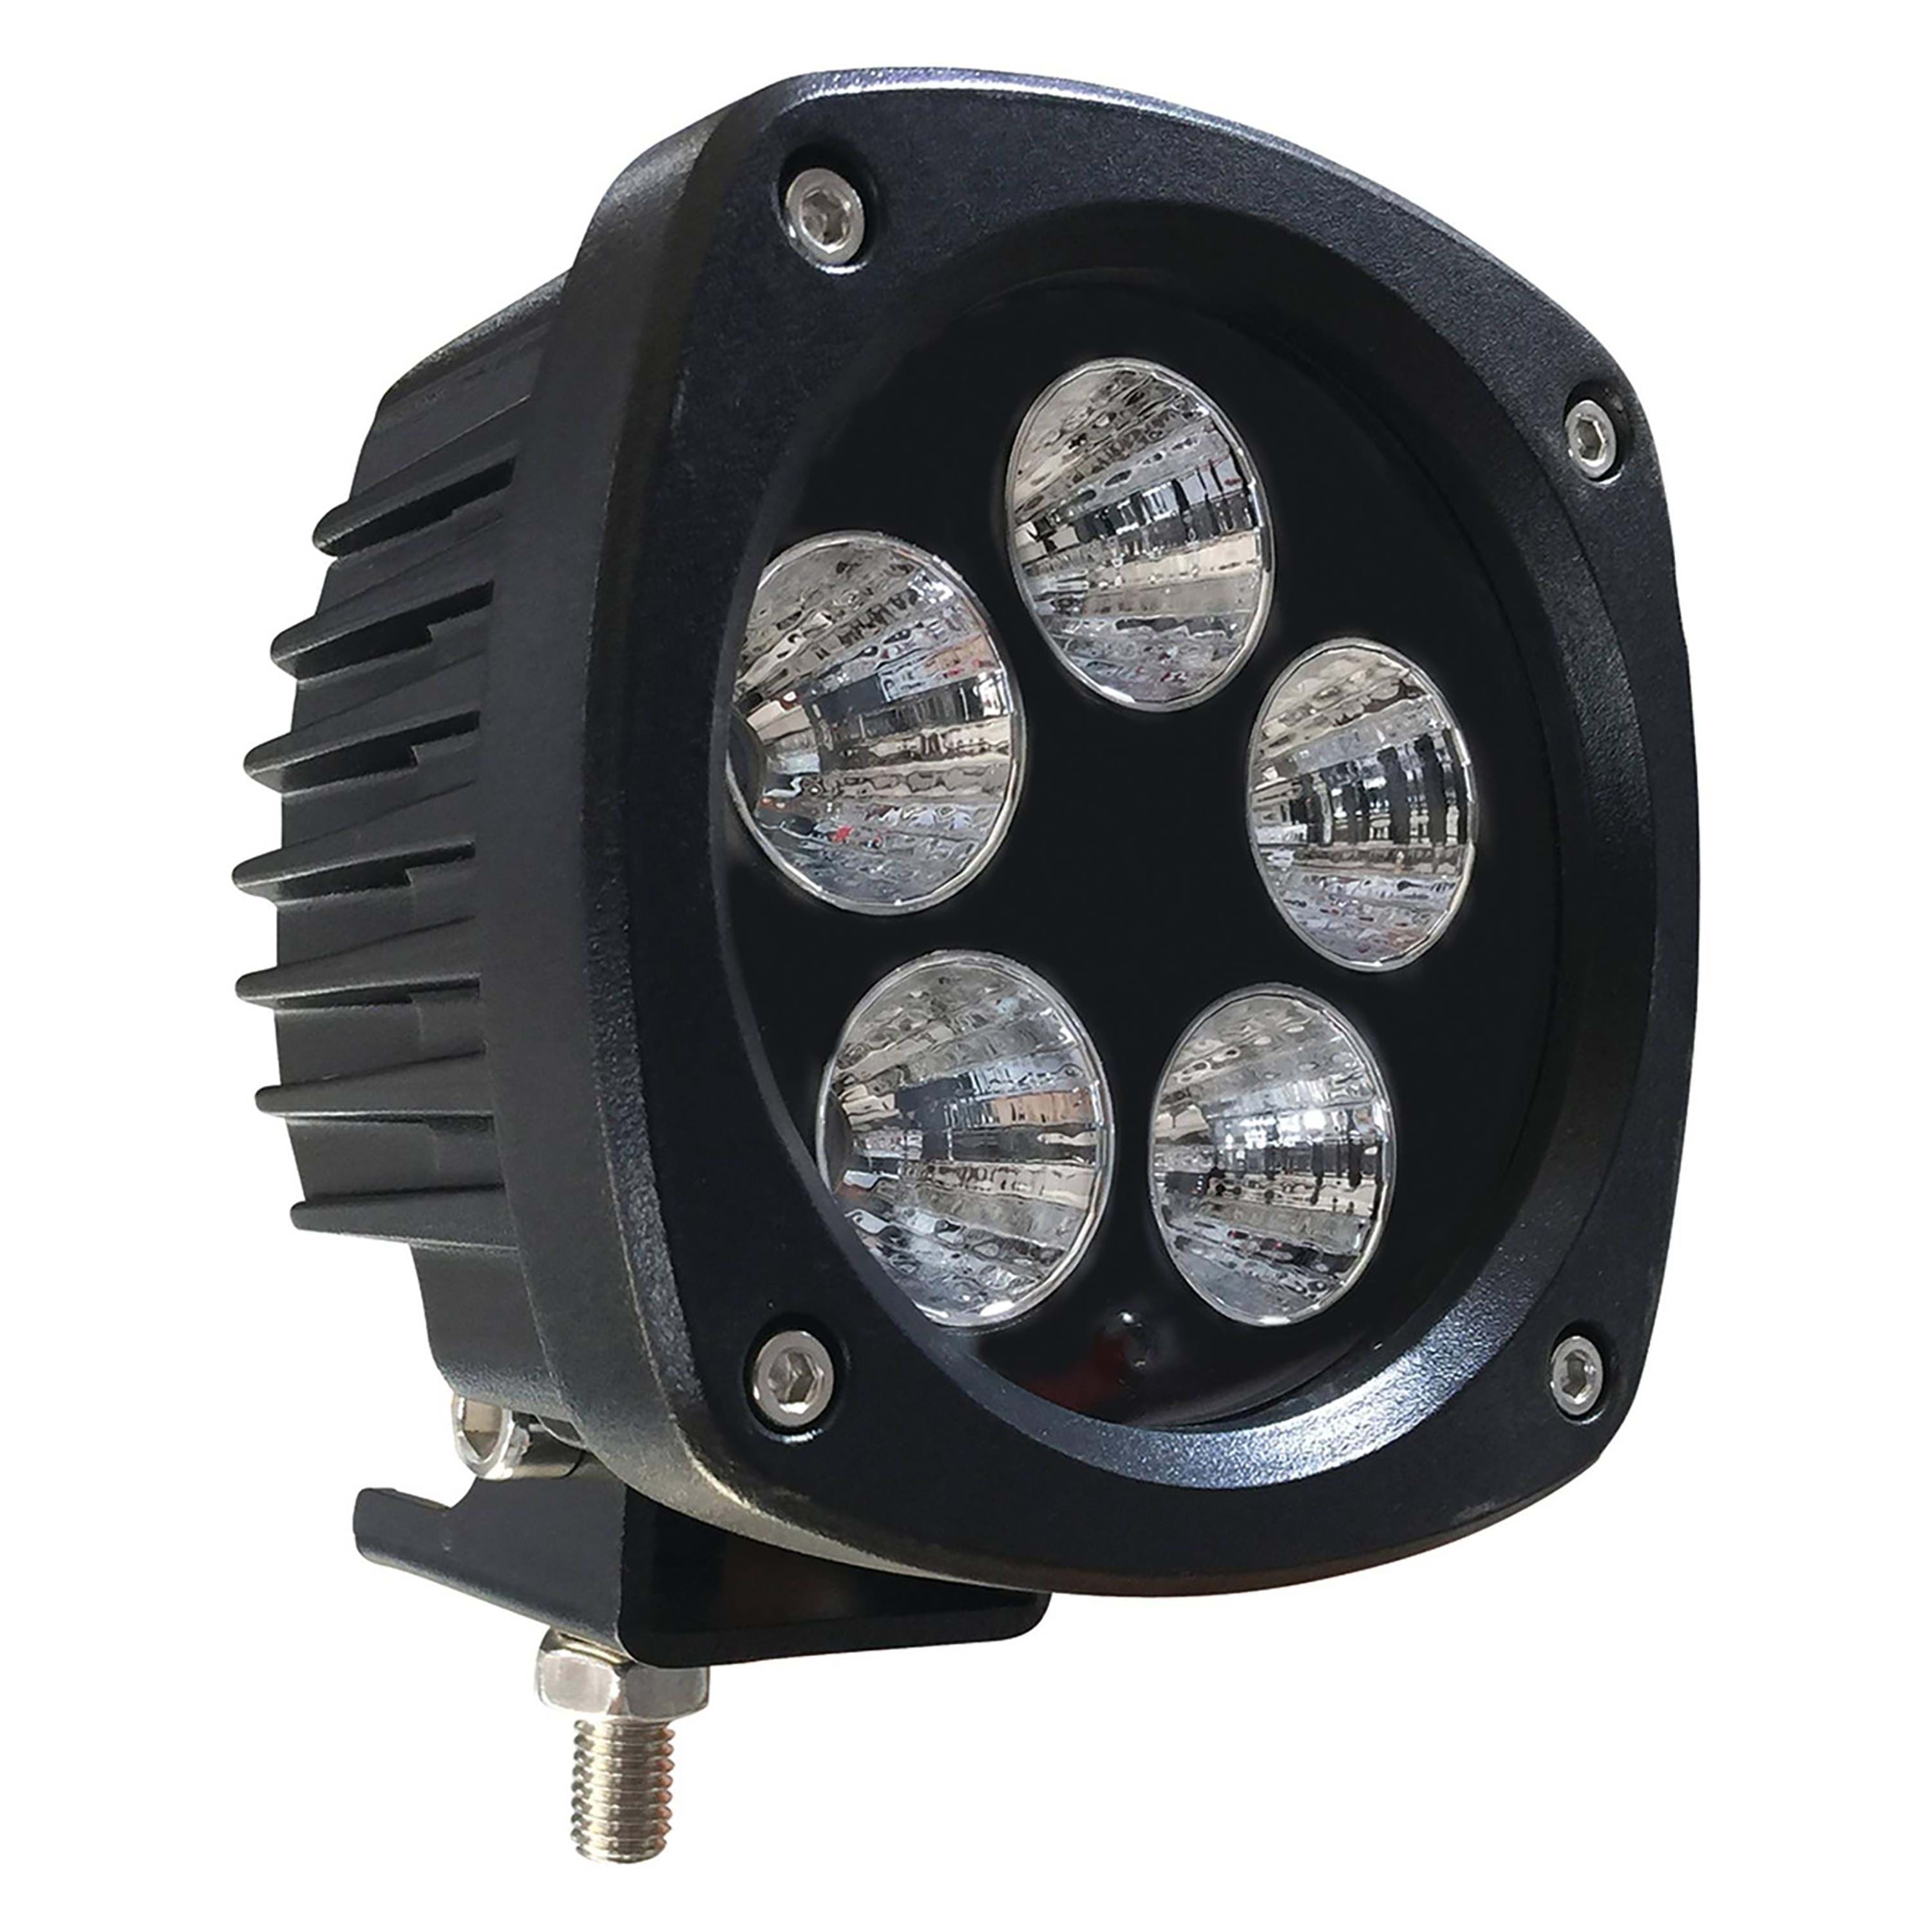 Tiger Lights Industrial 50W Compact LED Flood Light, Generation 2